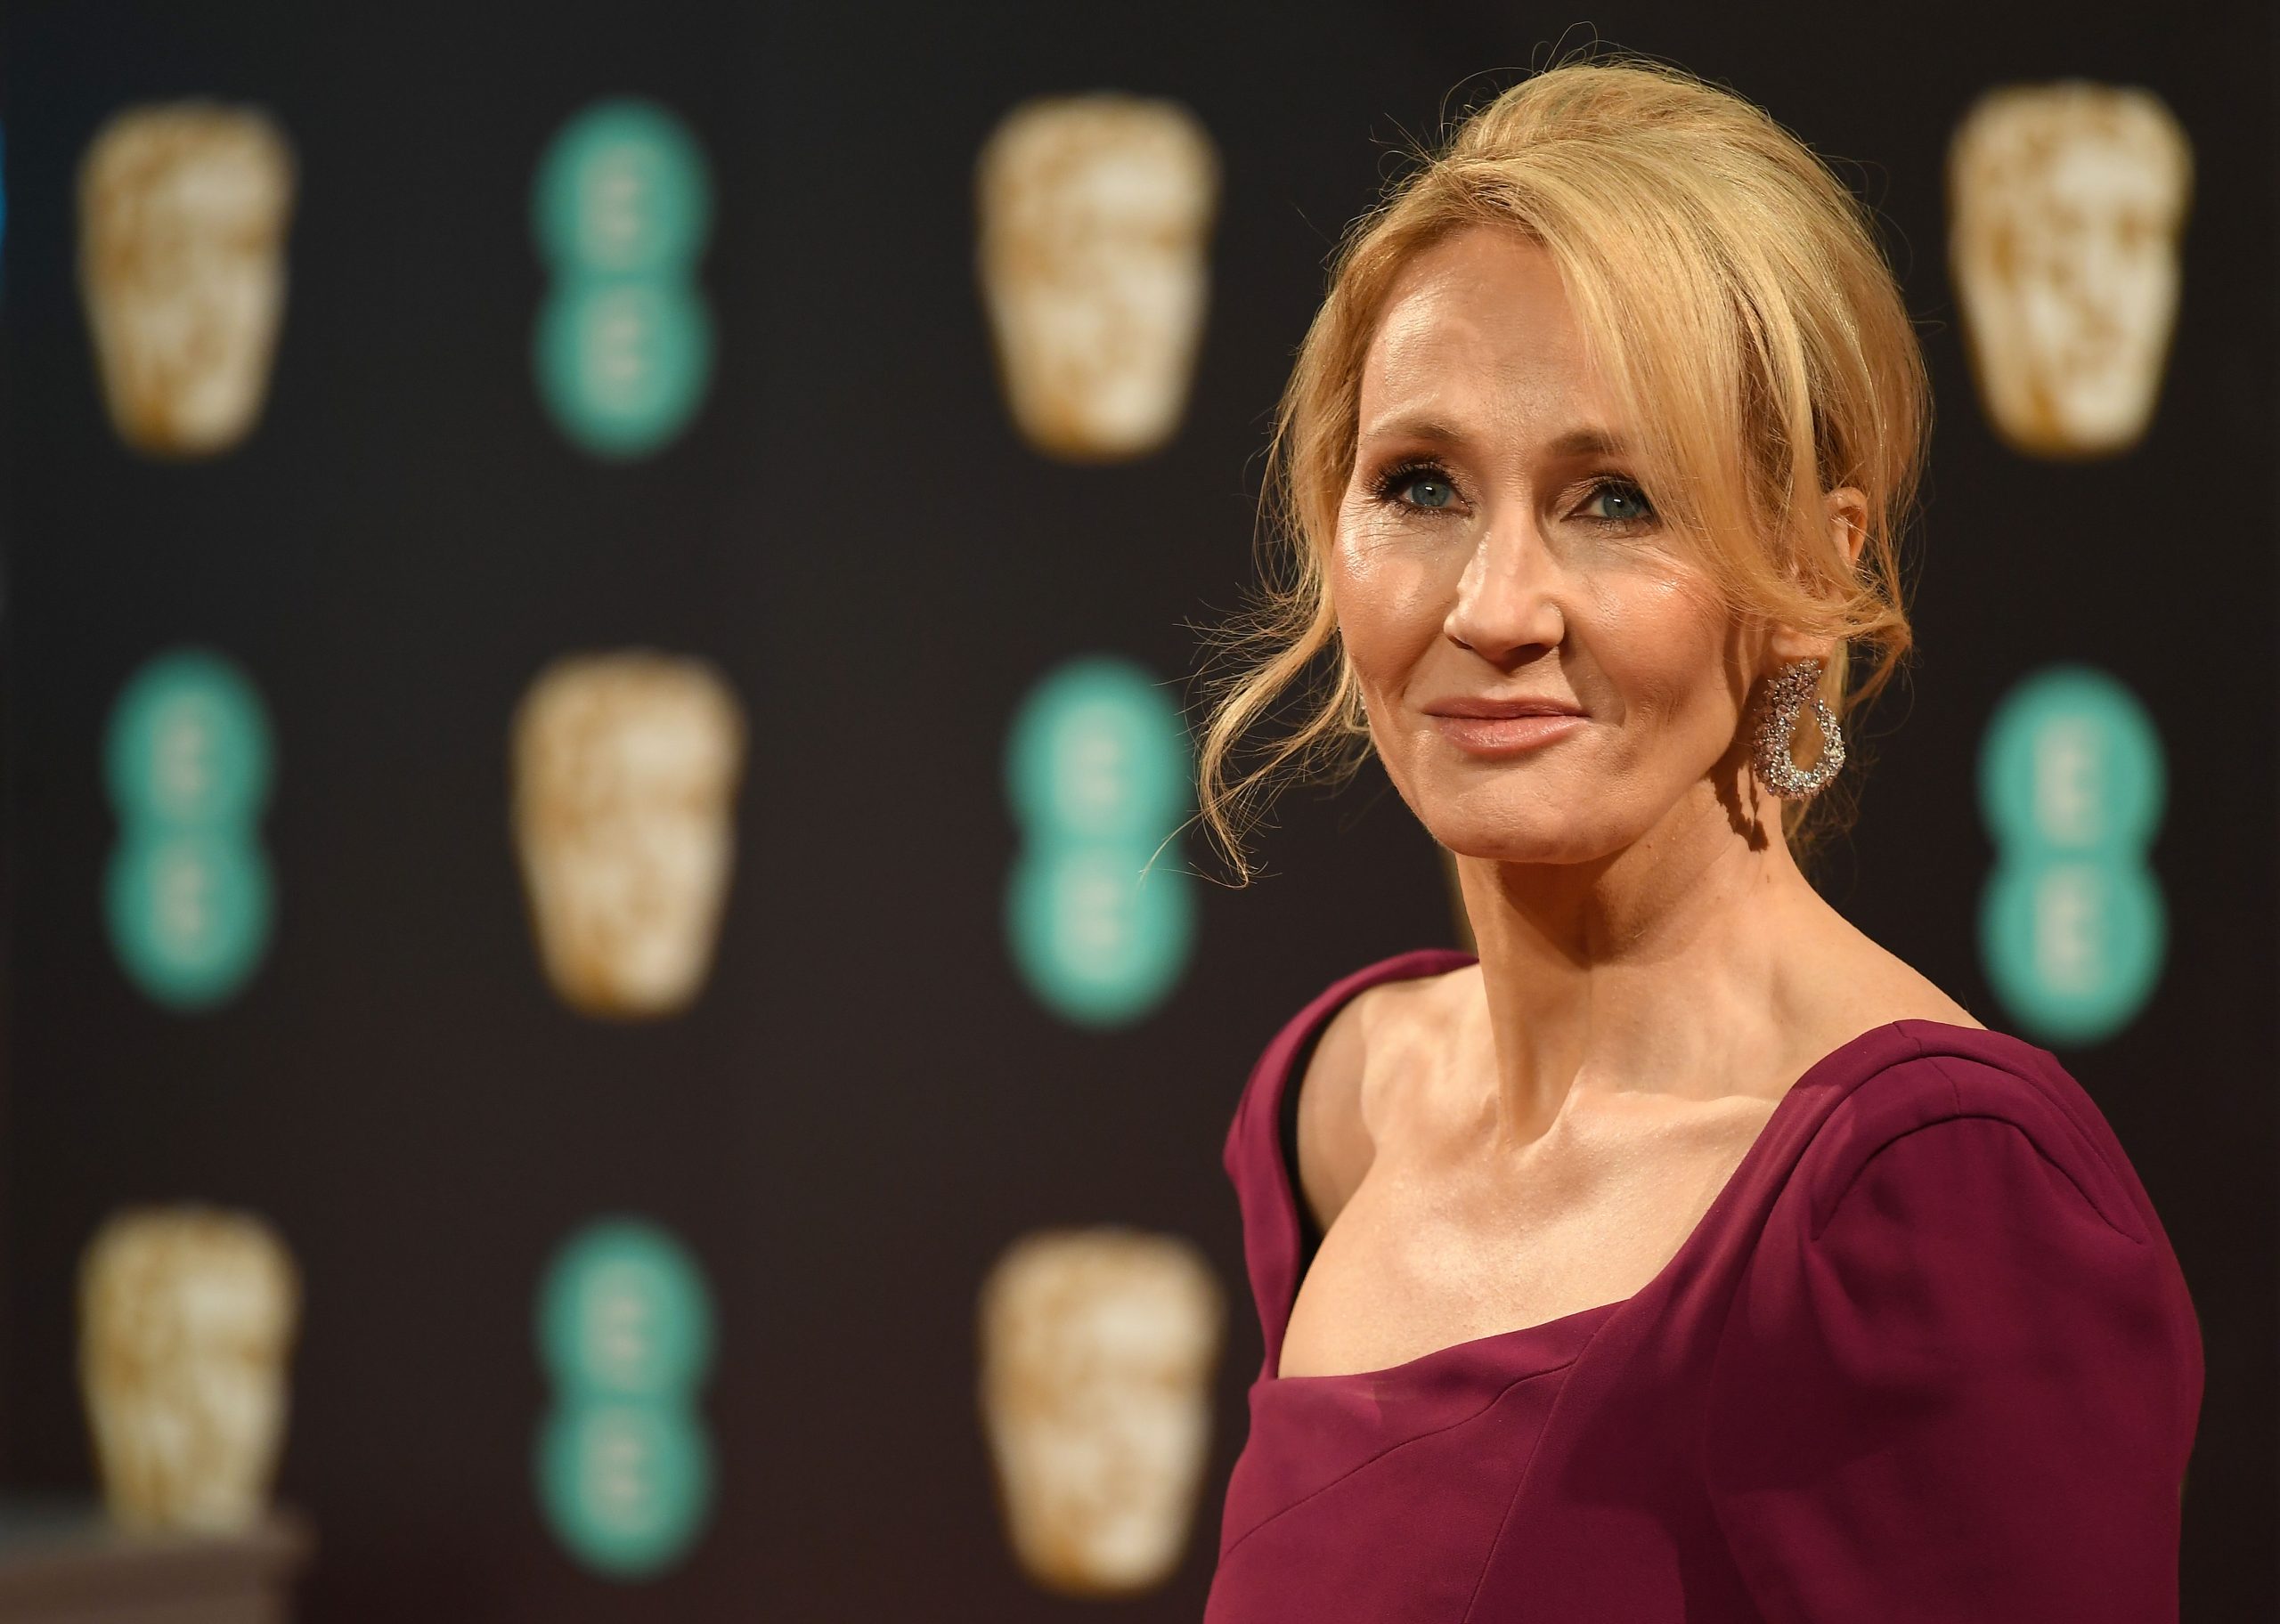 JK Rowling returns award over trans comments criticism